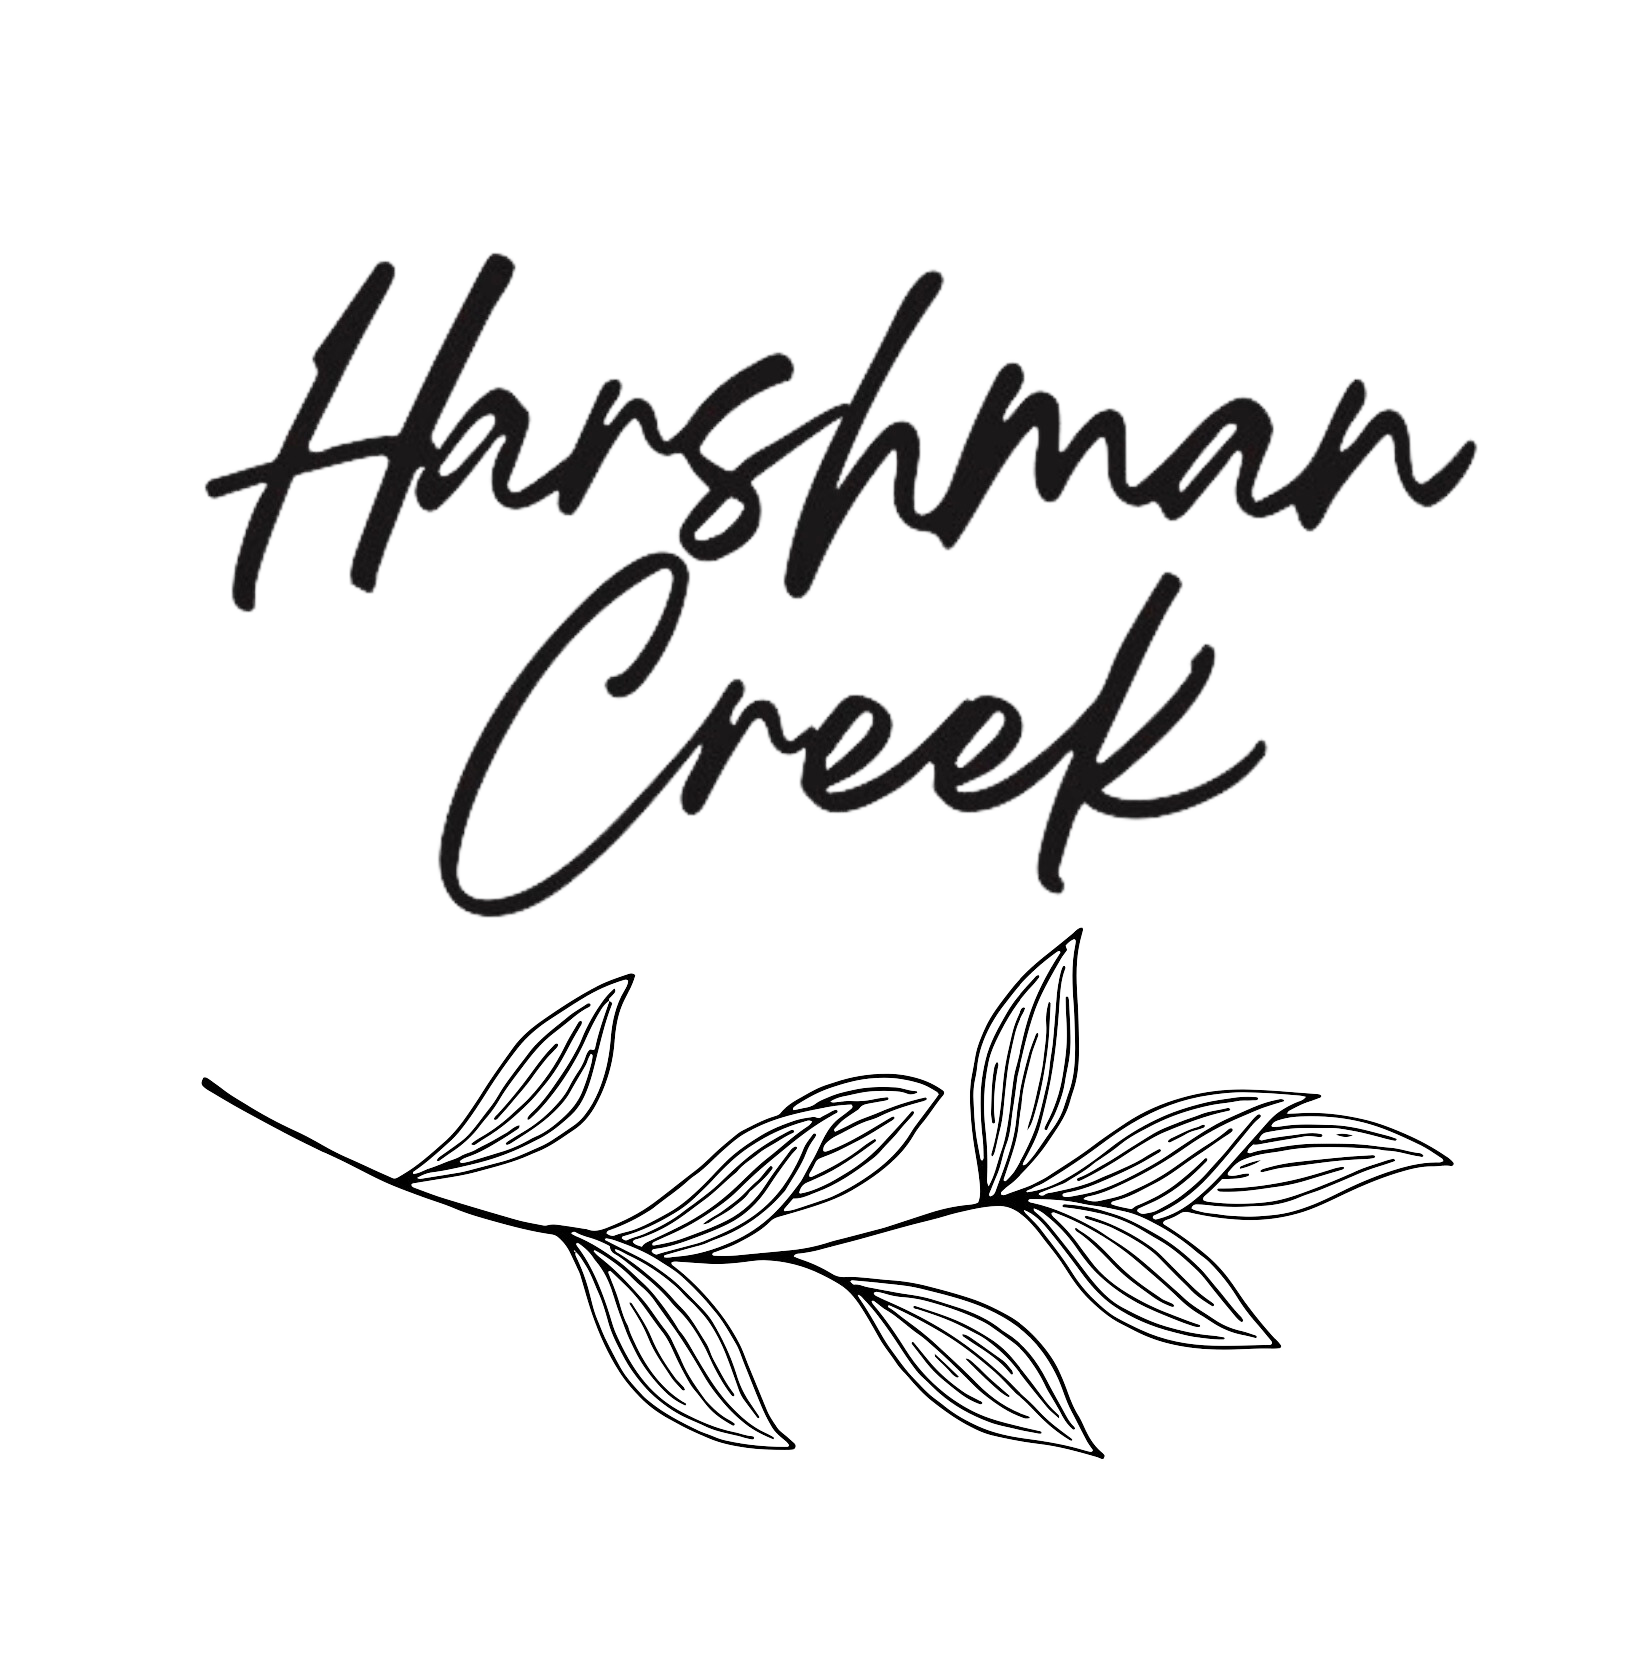 Harshman Creek